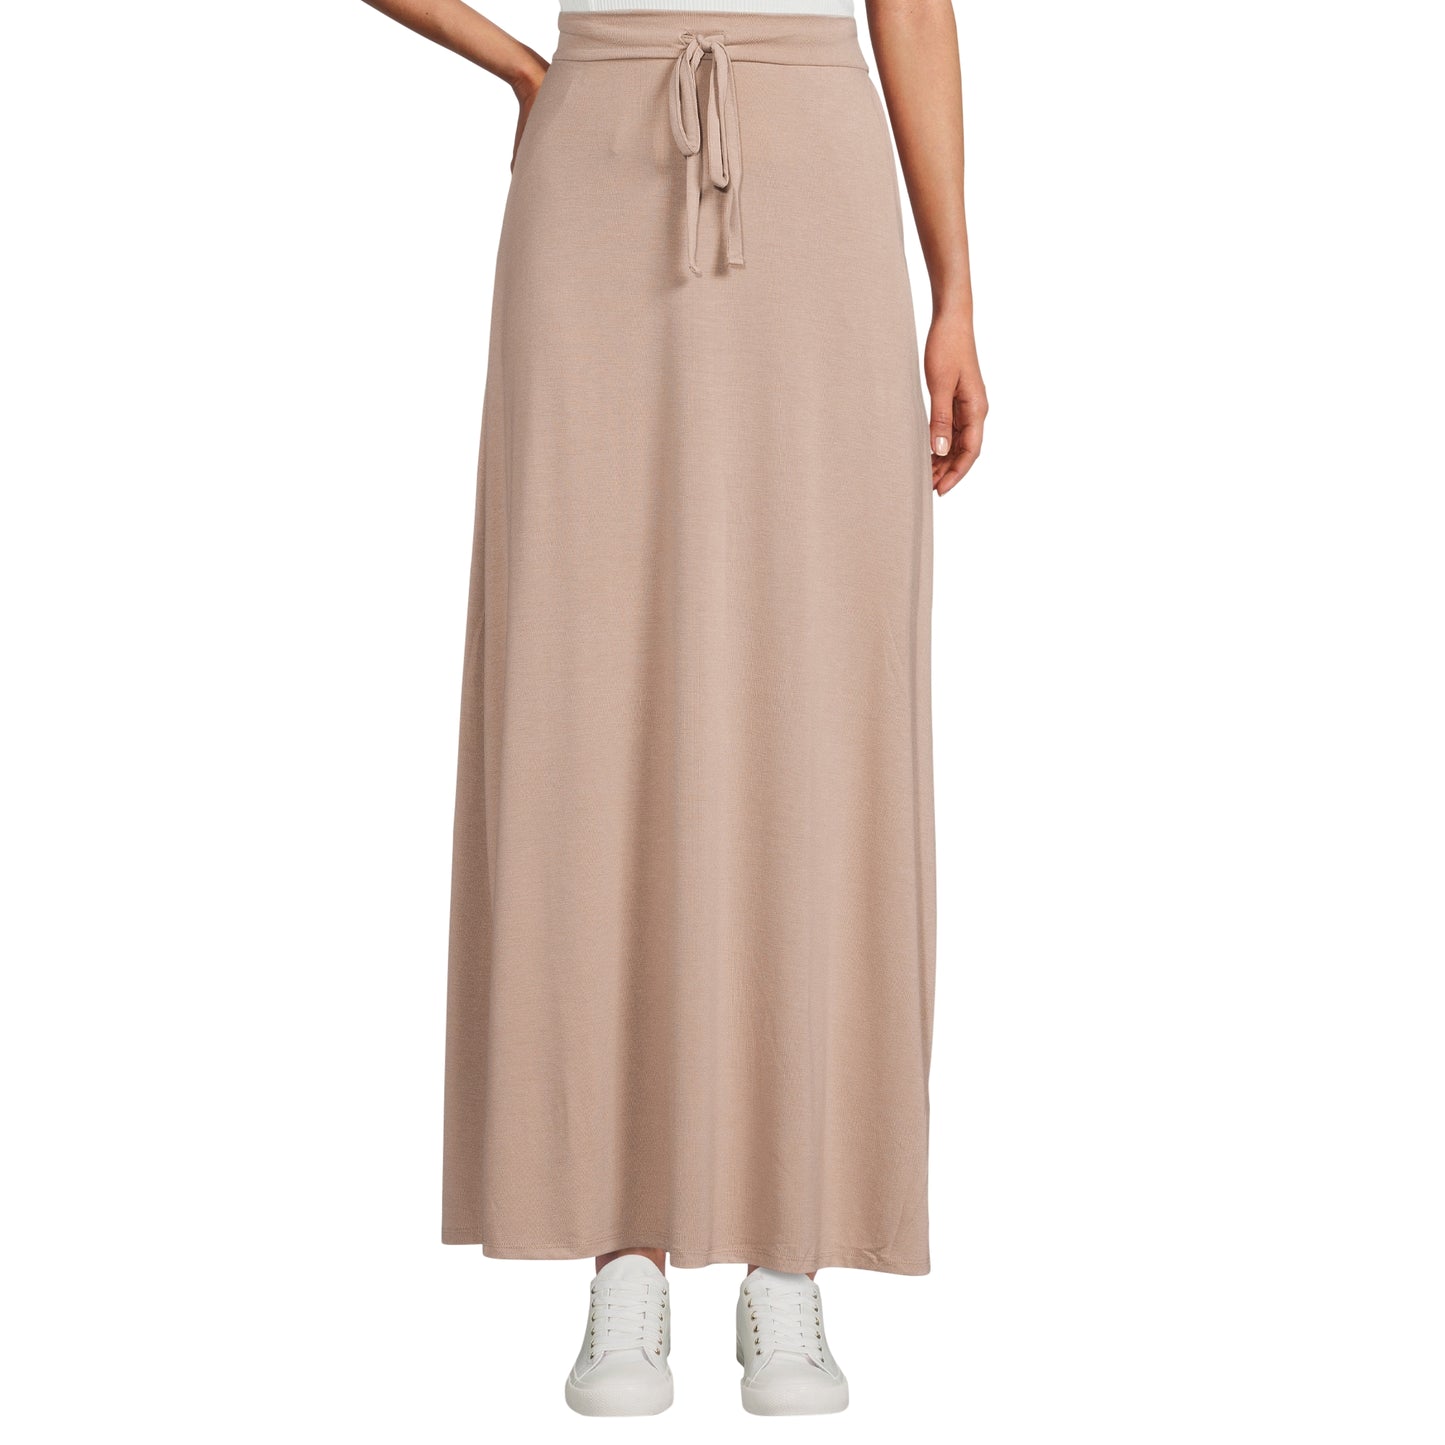 Women's Maxi Long Skirt Drawstring Waist Pockets Soft Comfort Fabric Taupe